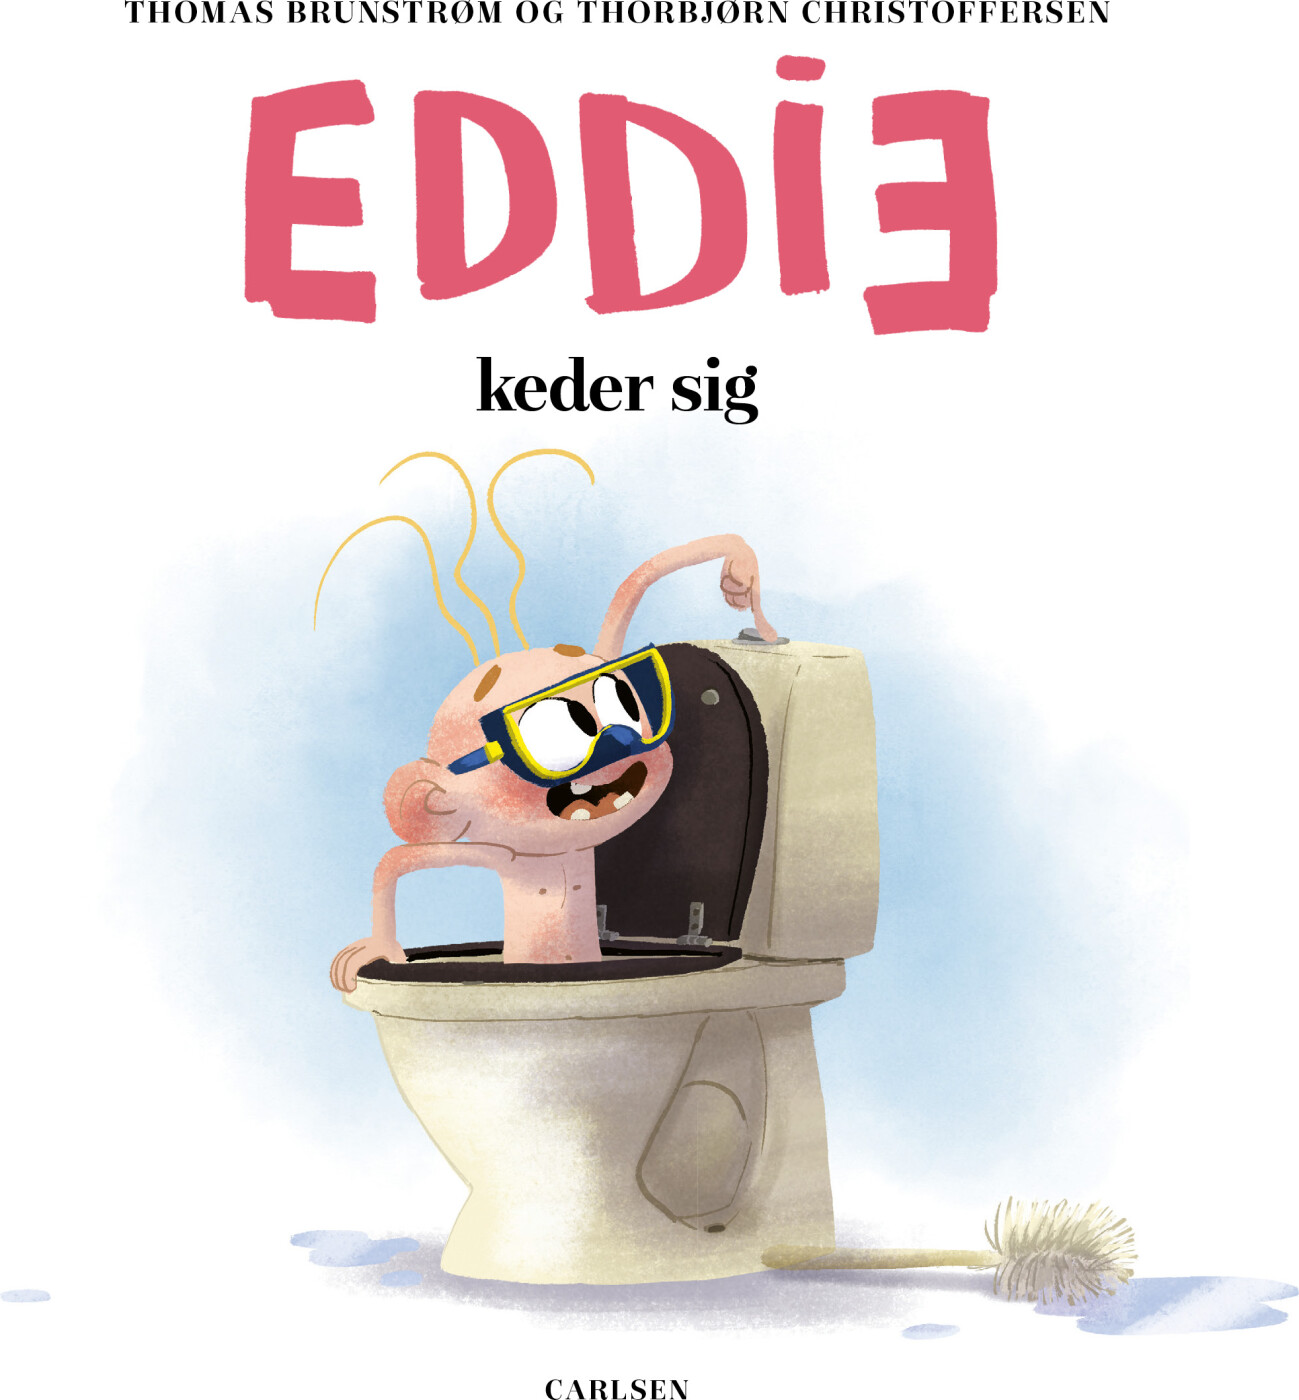 Eddie Keder Sig - Thomas Brunstrøm - Bog